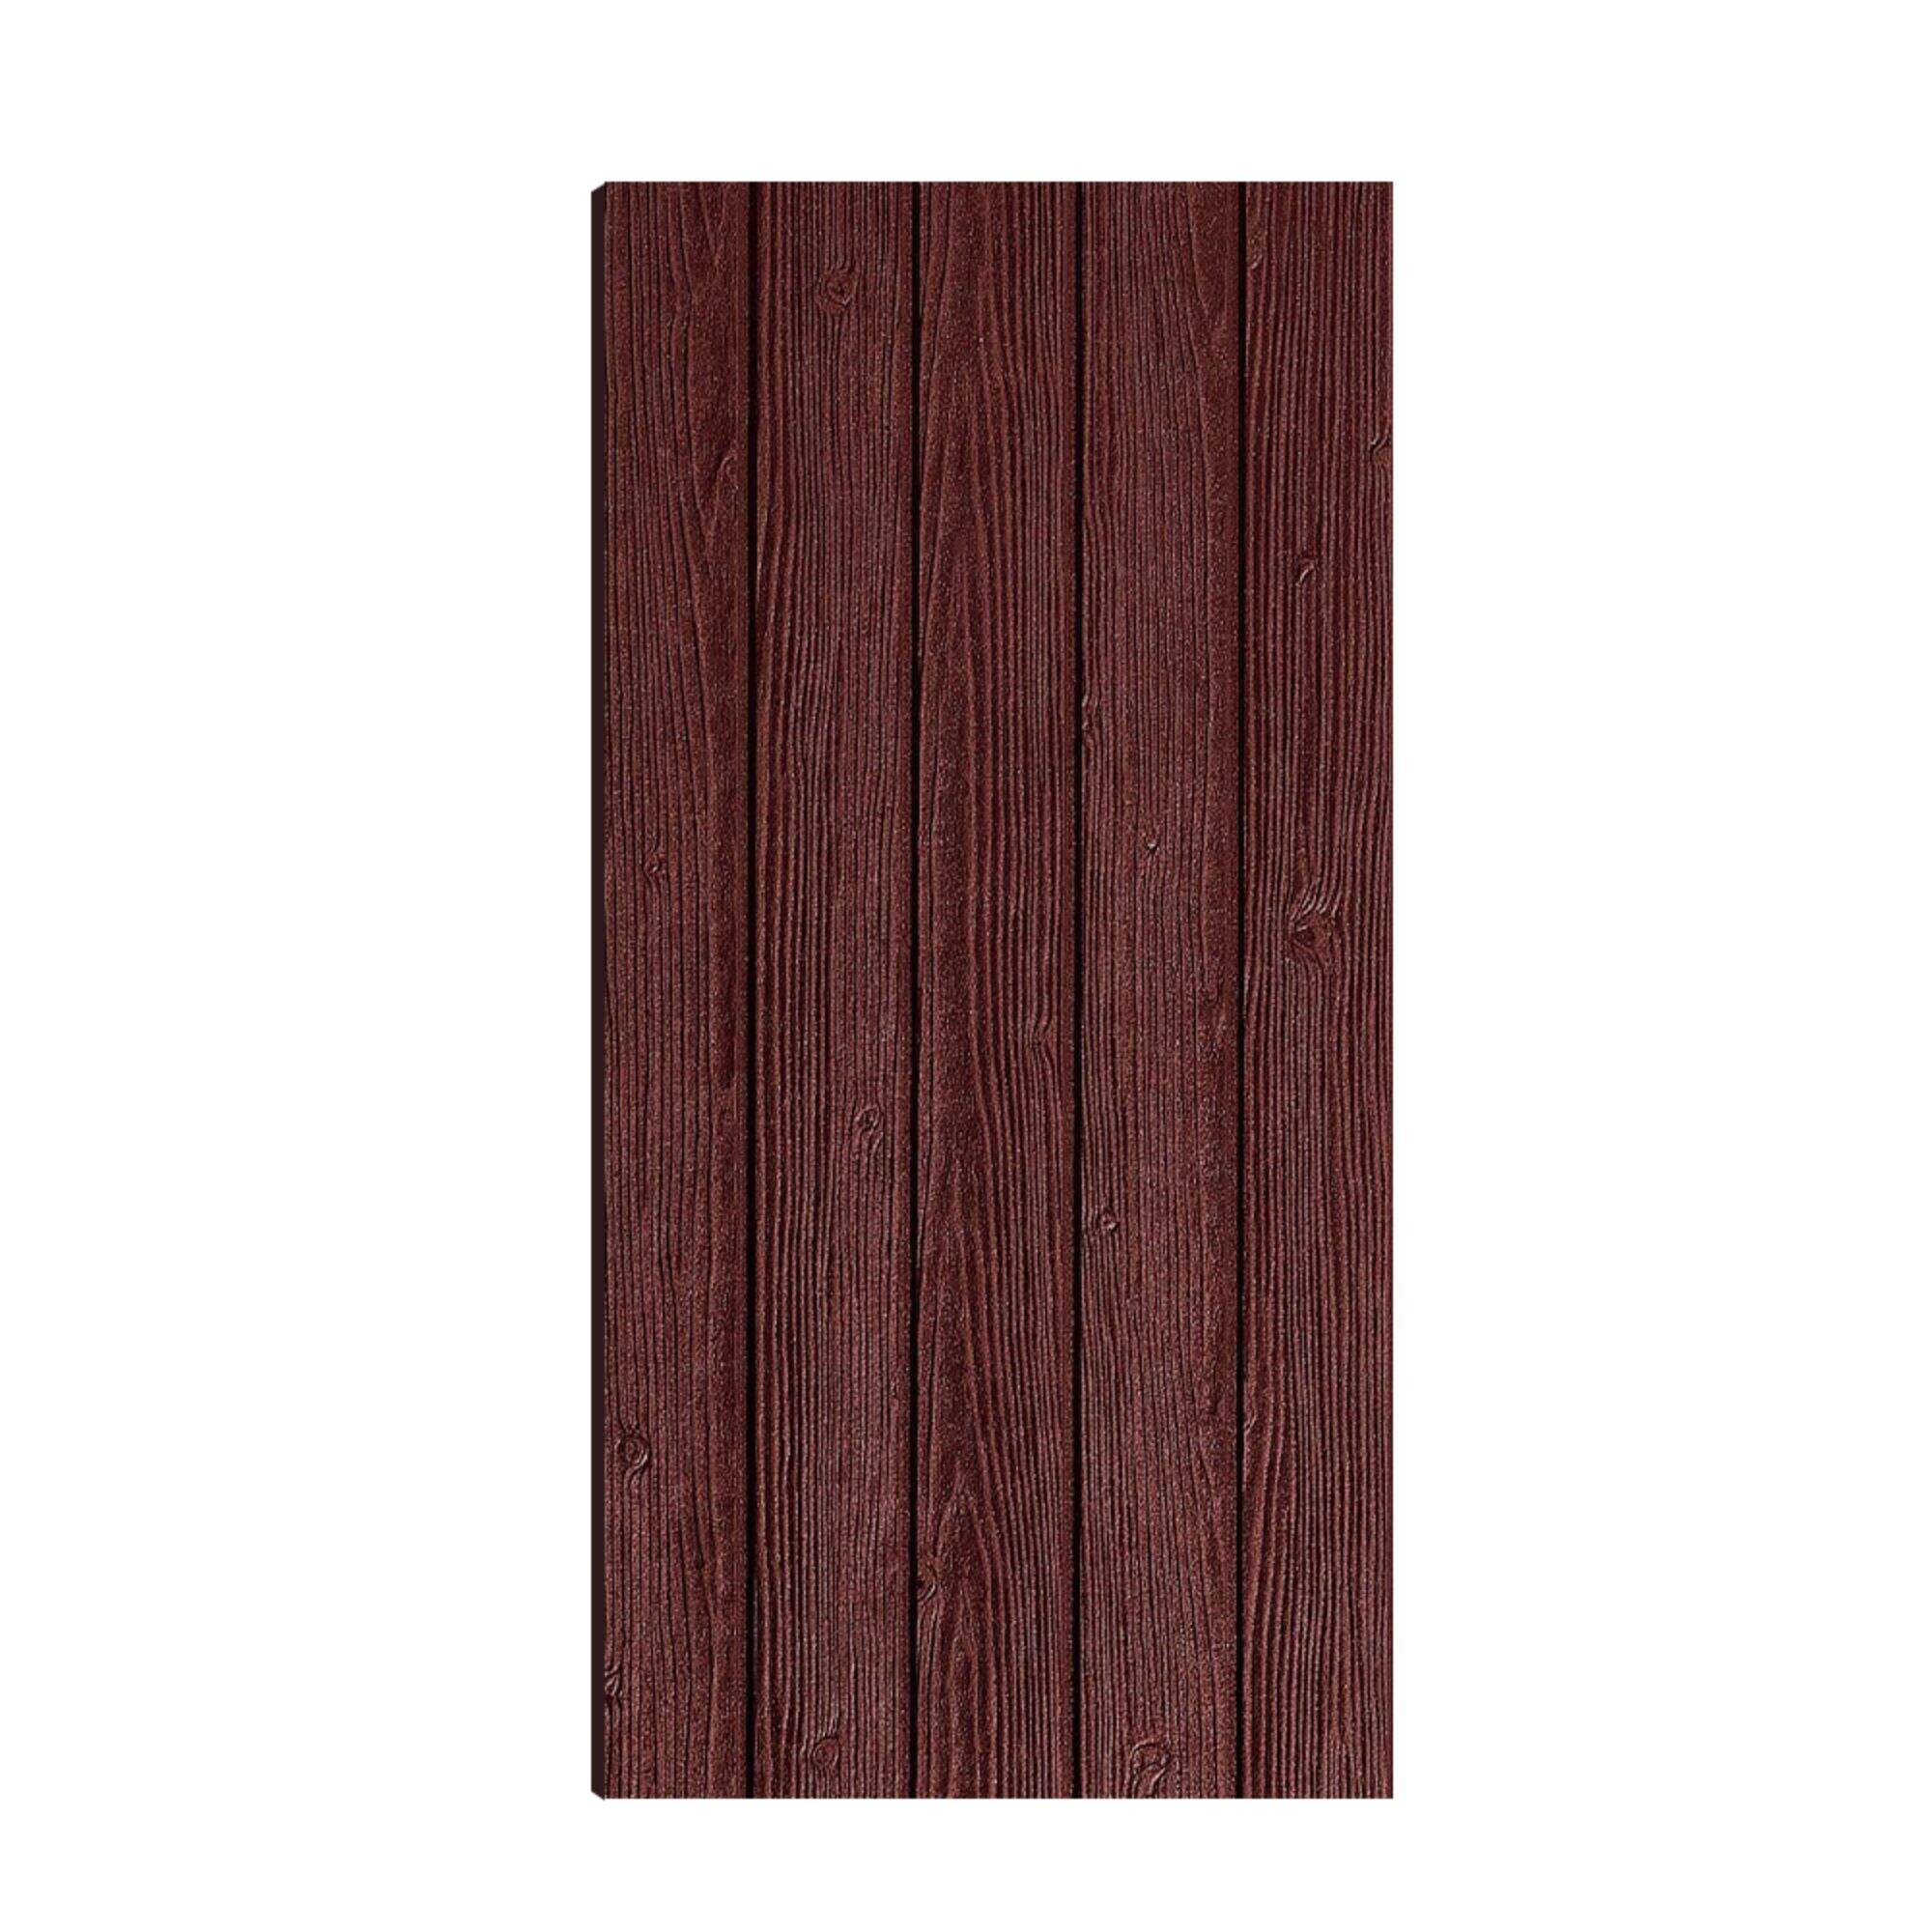 KTC Exterior Panel Wood Grain 645256